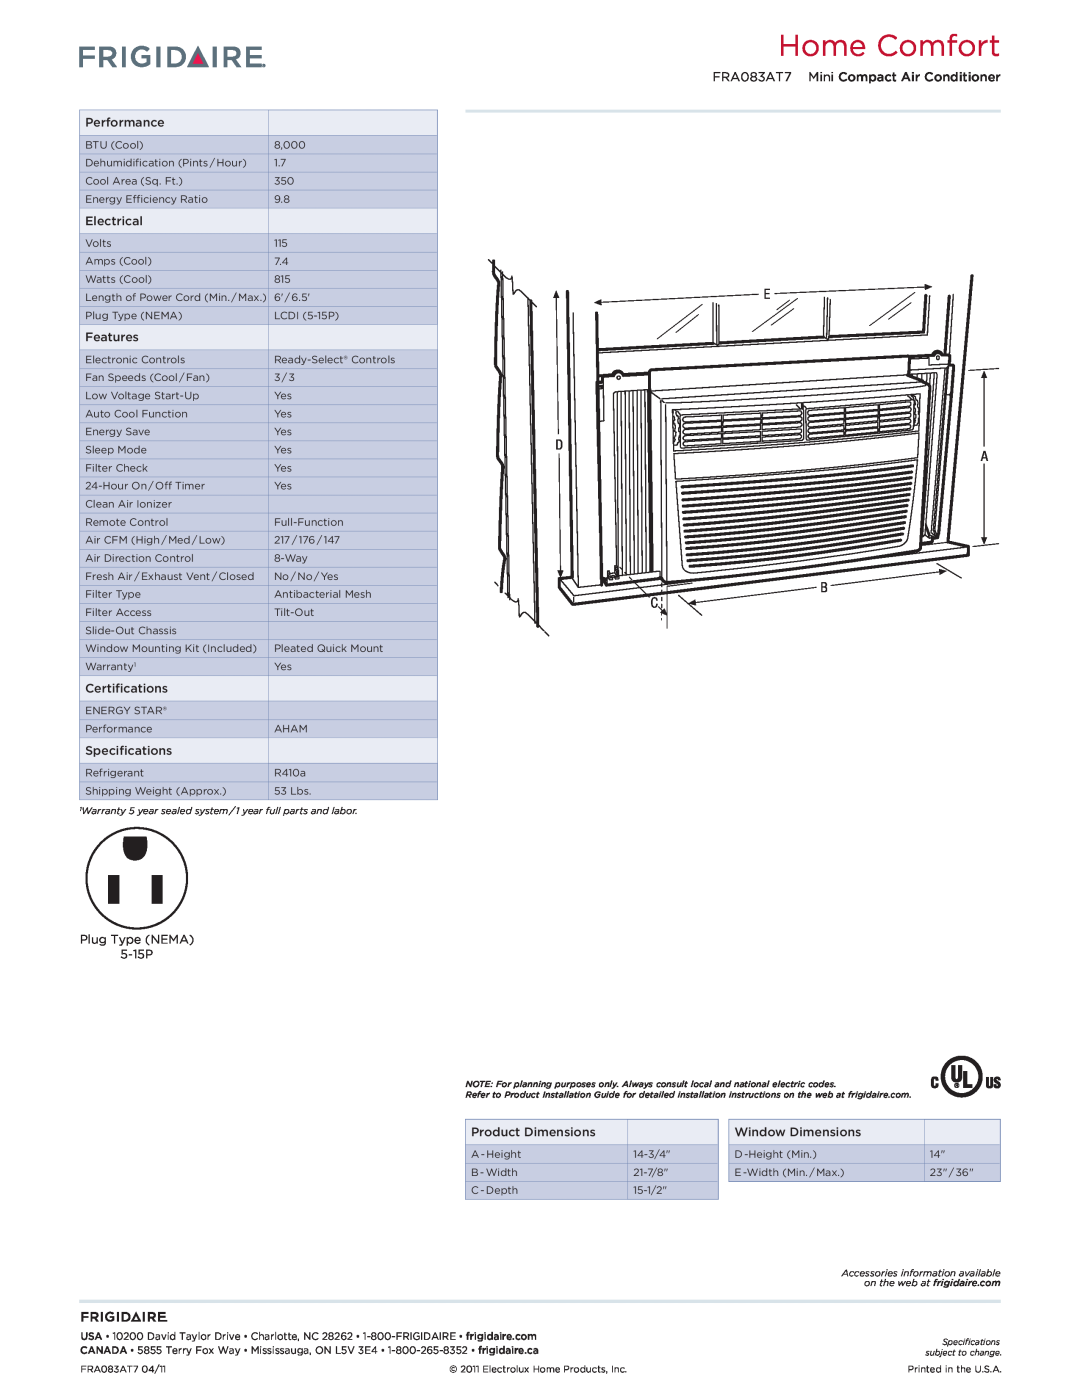 Frigidaire dimensions Home Comfort, E D A B C, FRA083AT7 Mini Compact Air Conditioner 